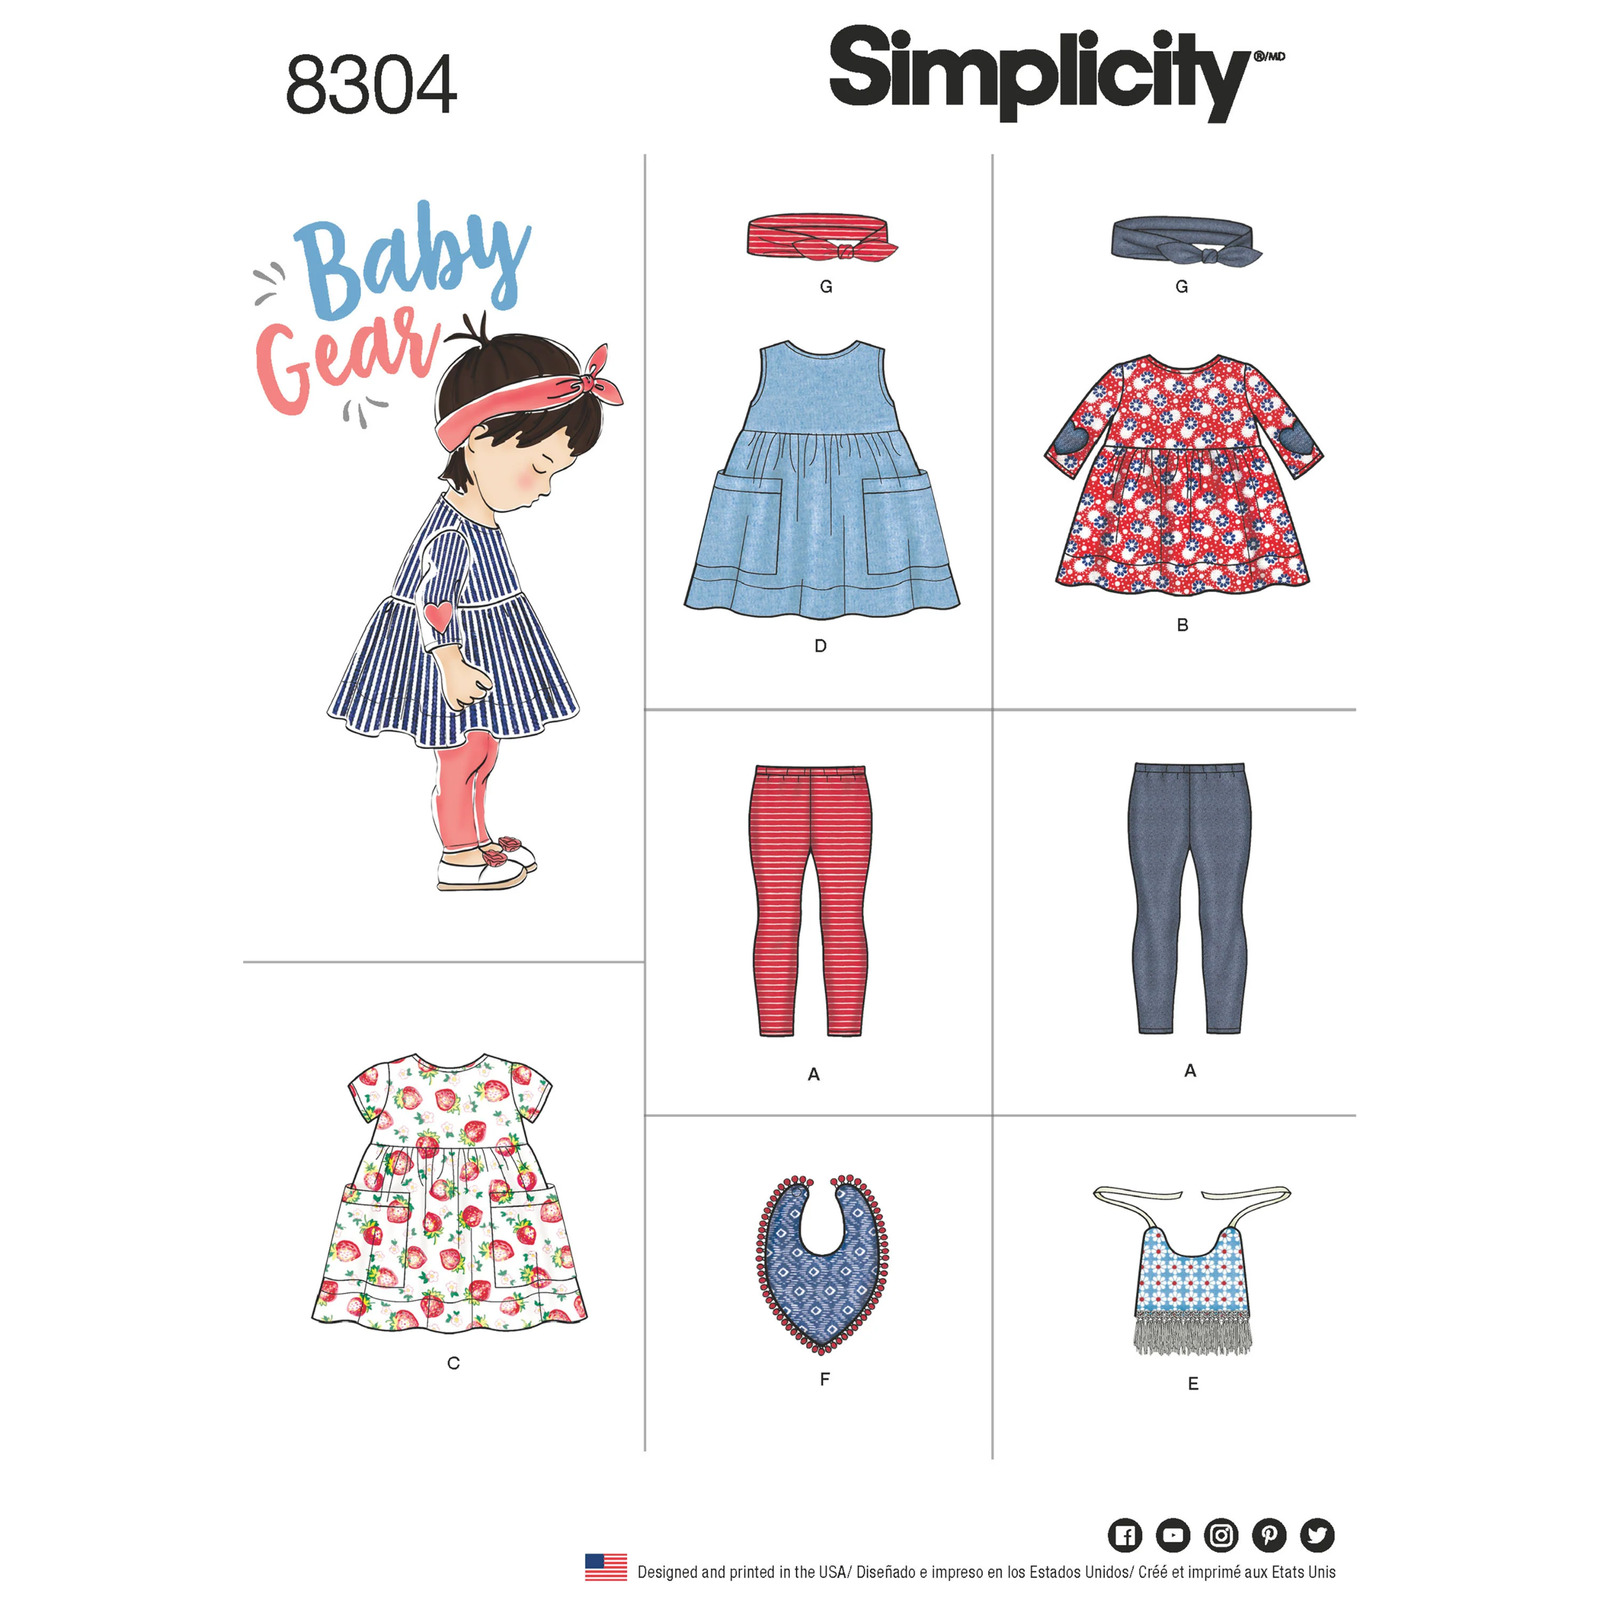 Simplicity Pattern 8304 Babies\', Leggings, Top, Dress, Bibs and Headband in thre